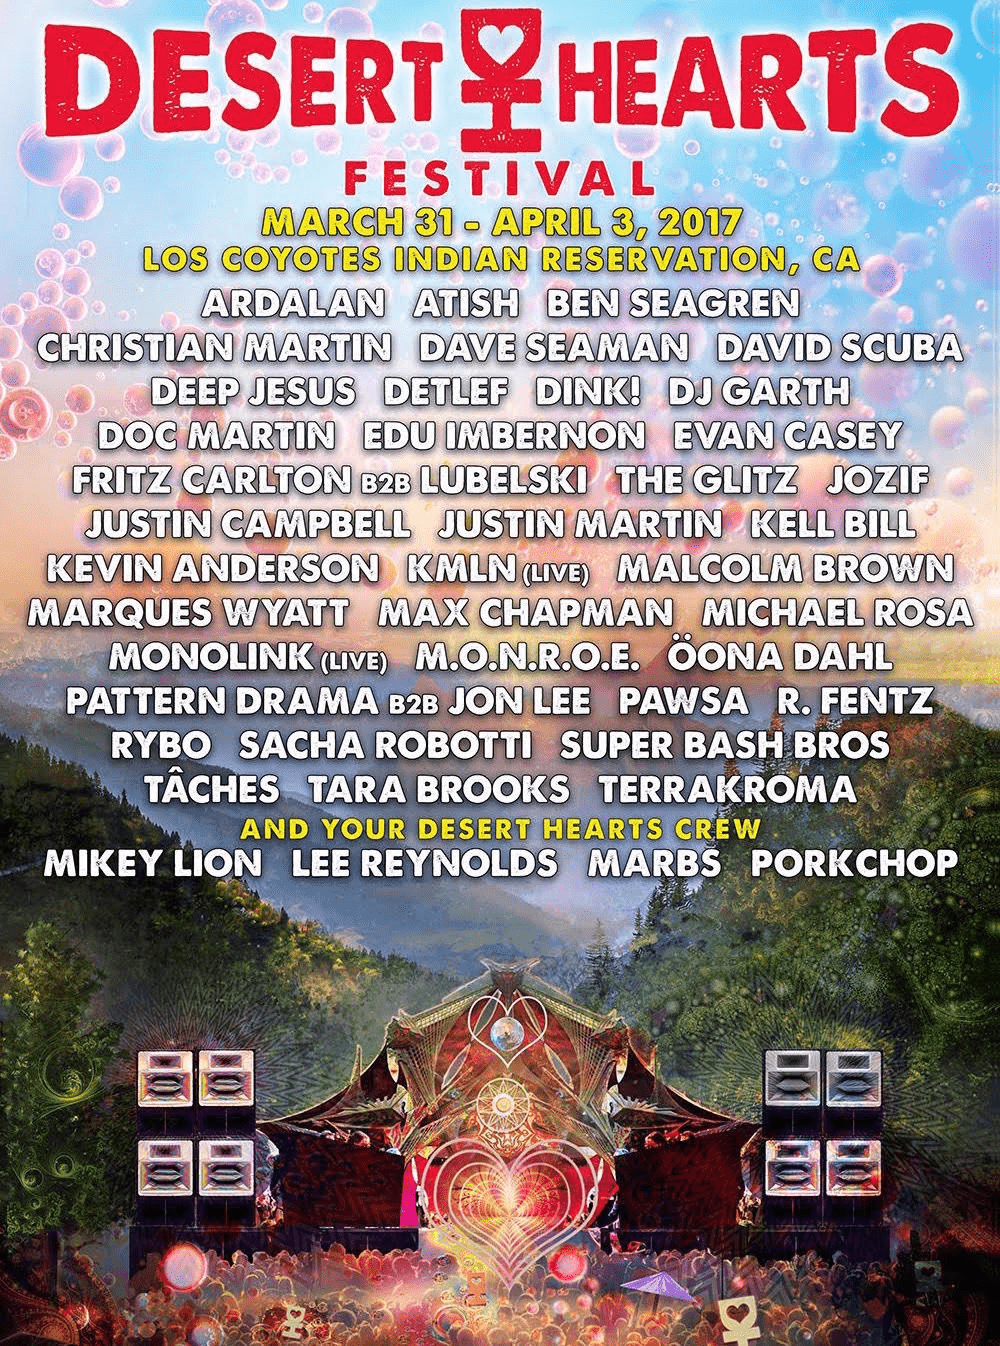 Desert Hearts Festival 2017 Lineup poster image